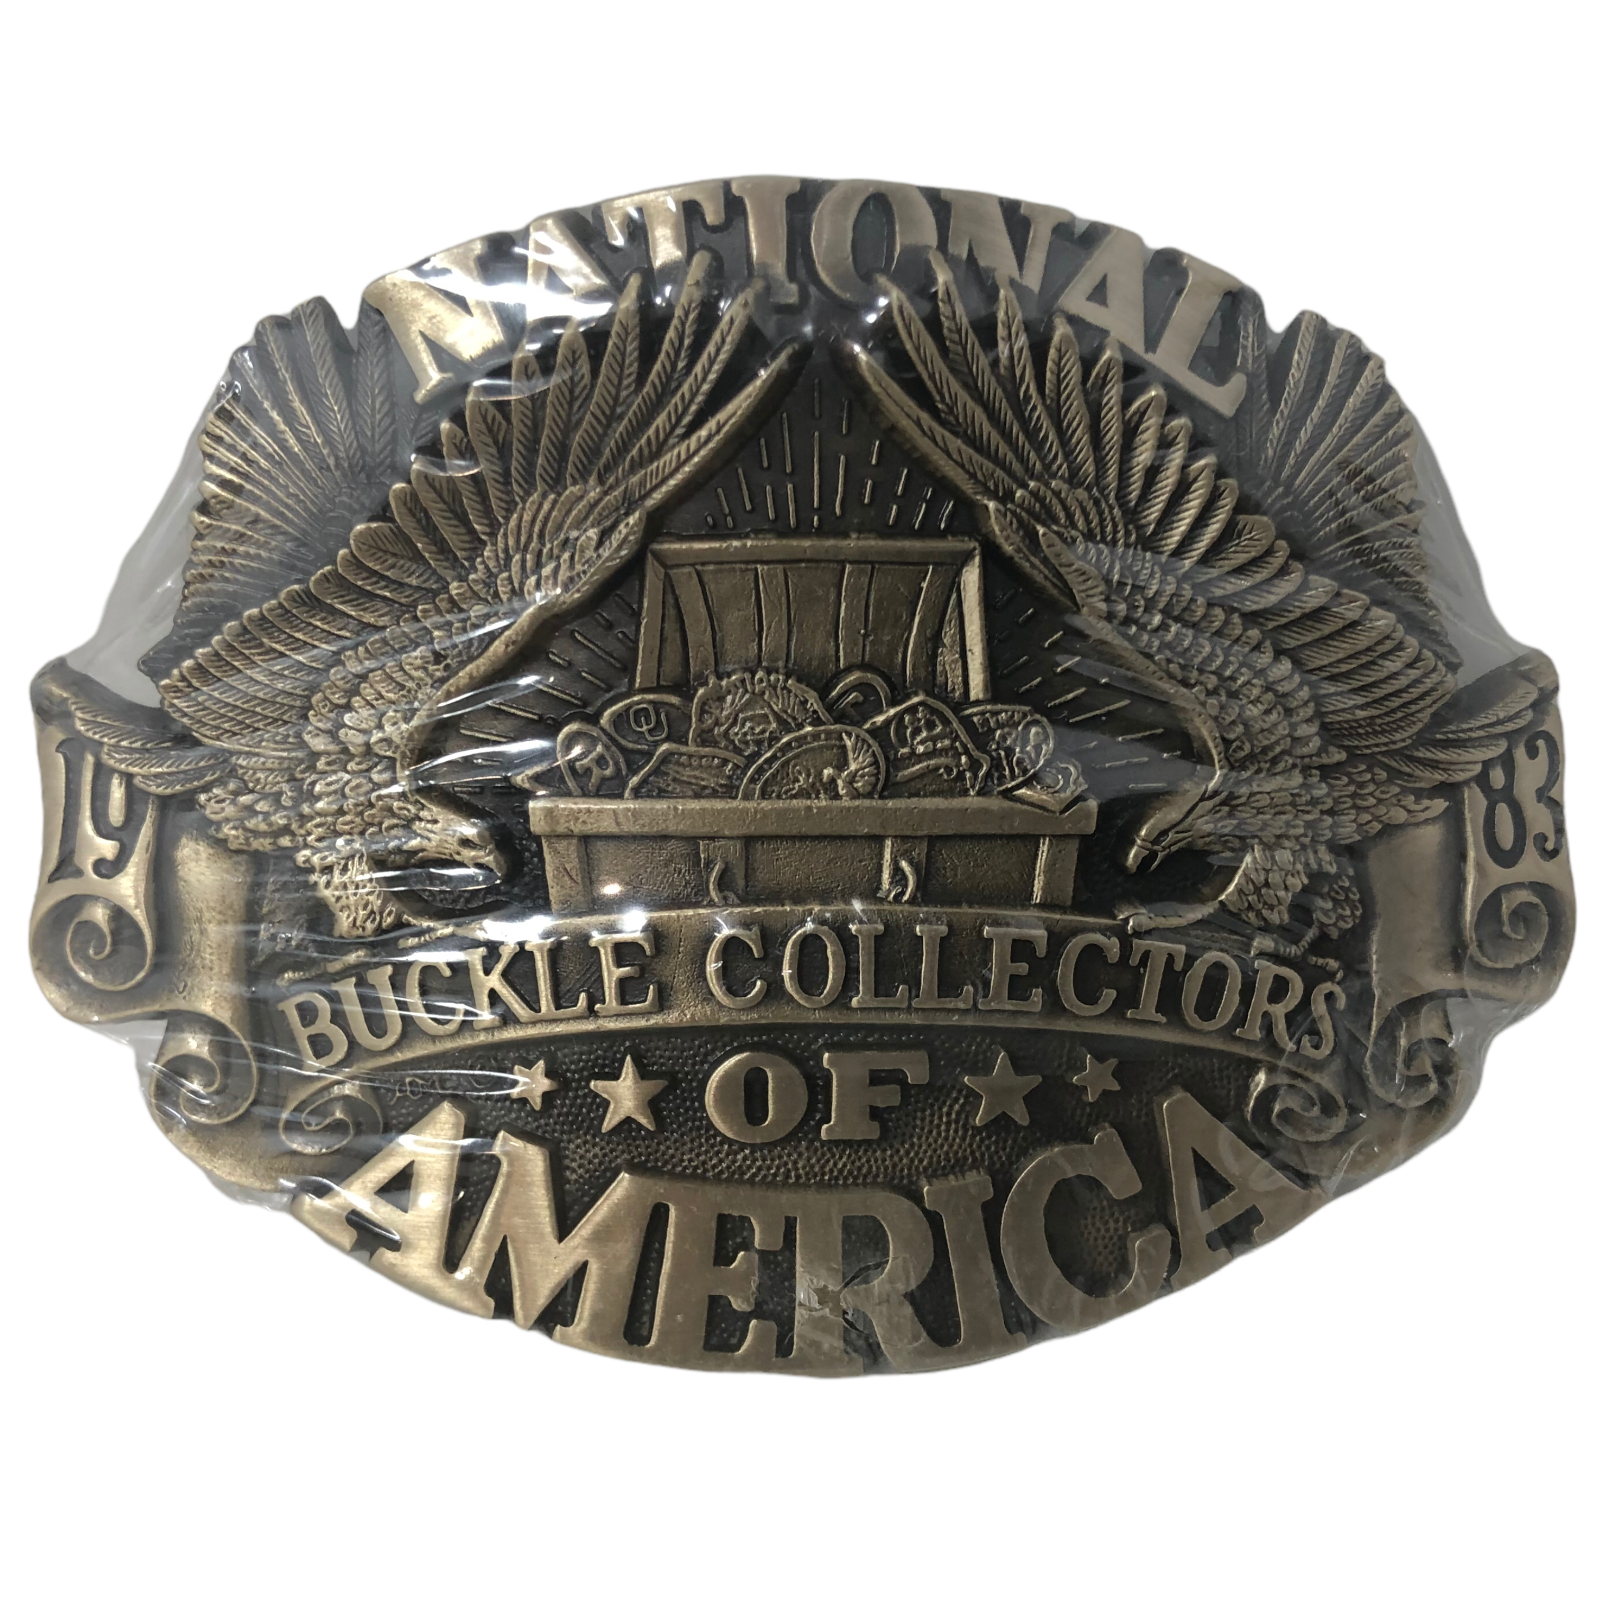 VTG NIP National Buckle Collectors of America 1983 Buckle Award Design Medals Award Design Medals